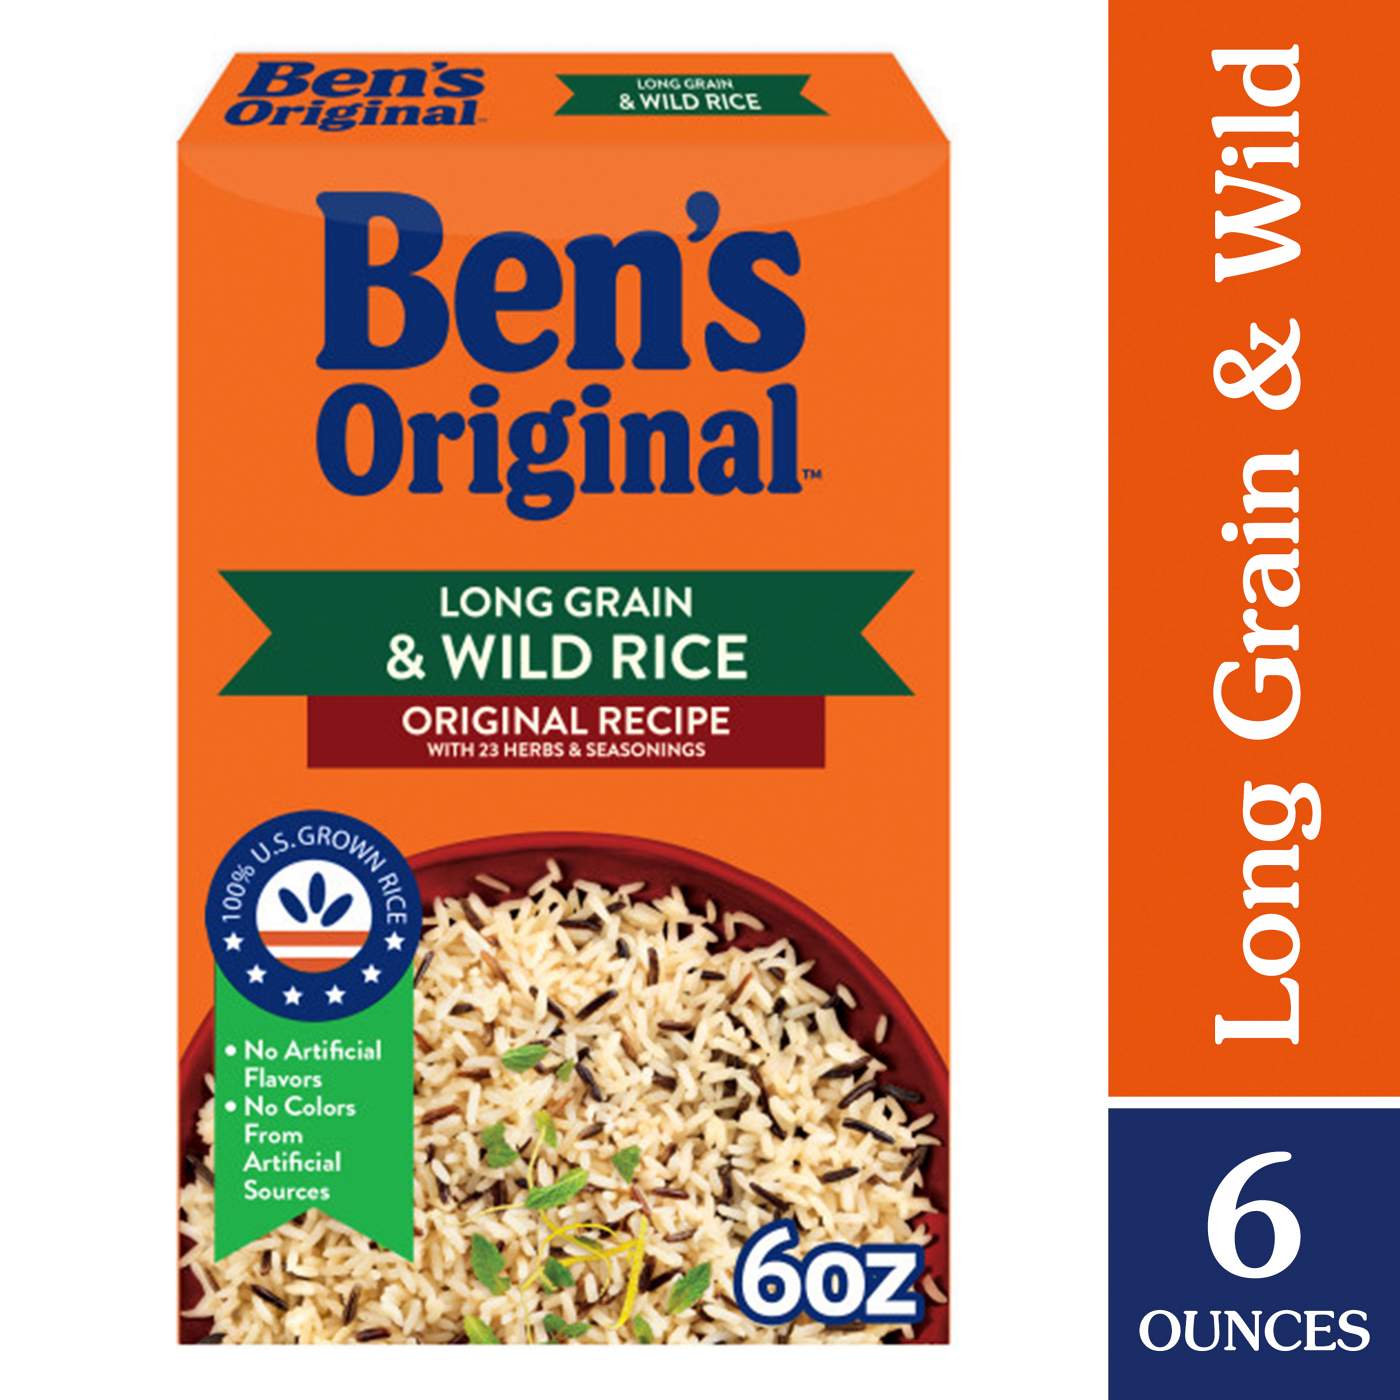 Ben's Original Long Grain & Wild Rice - Original; image 2 of 6